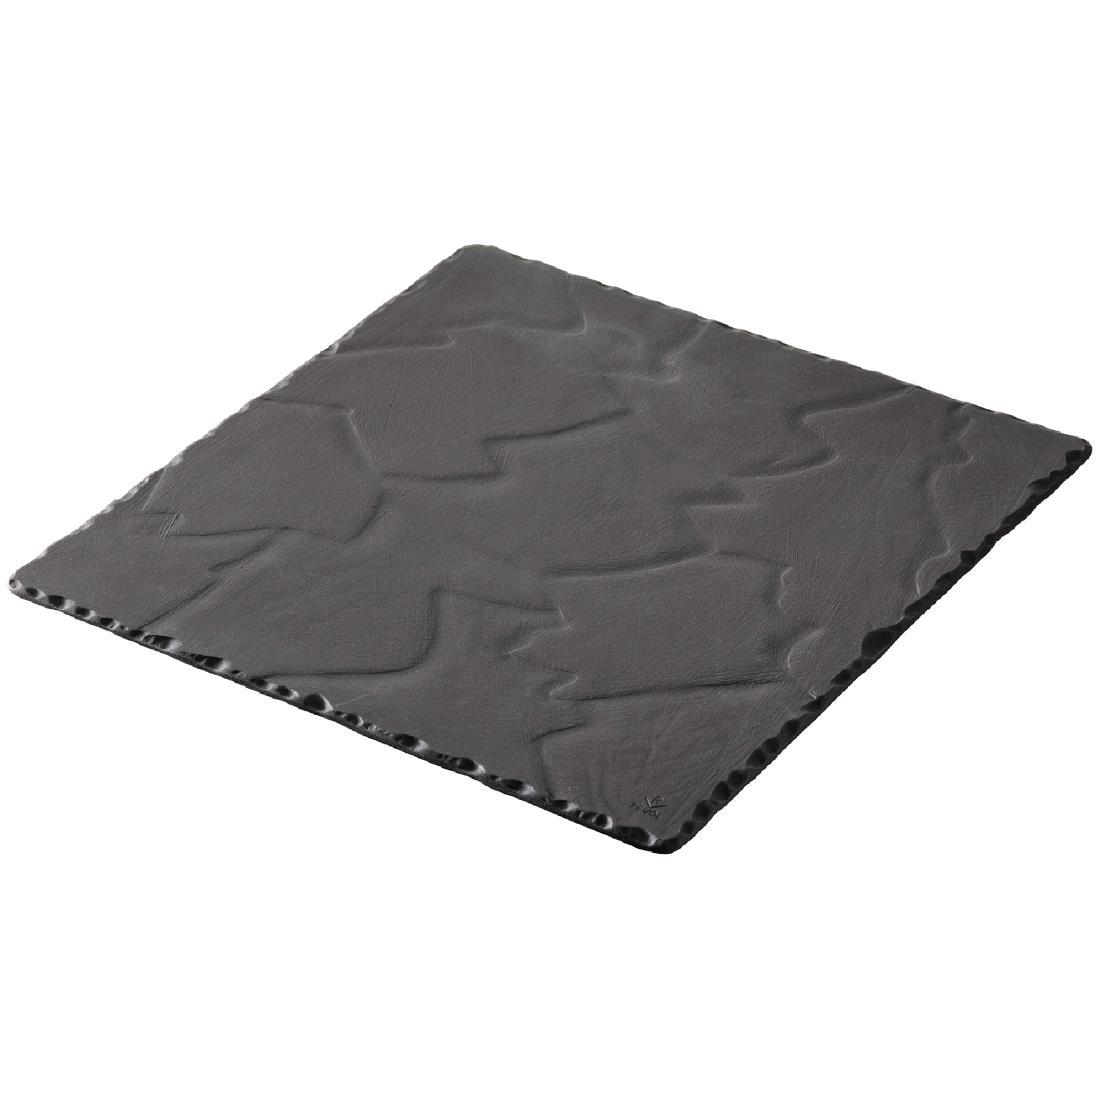 Revol Basalt Square Plates 250mm (Pack of 6) - DM324  - 1